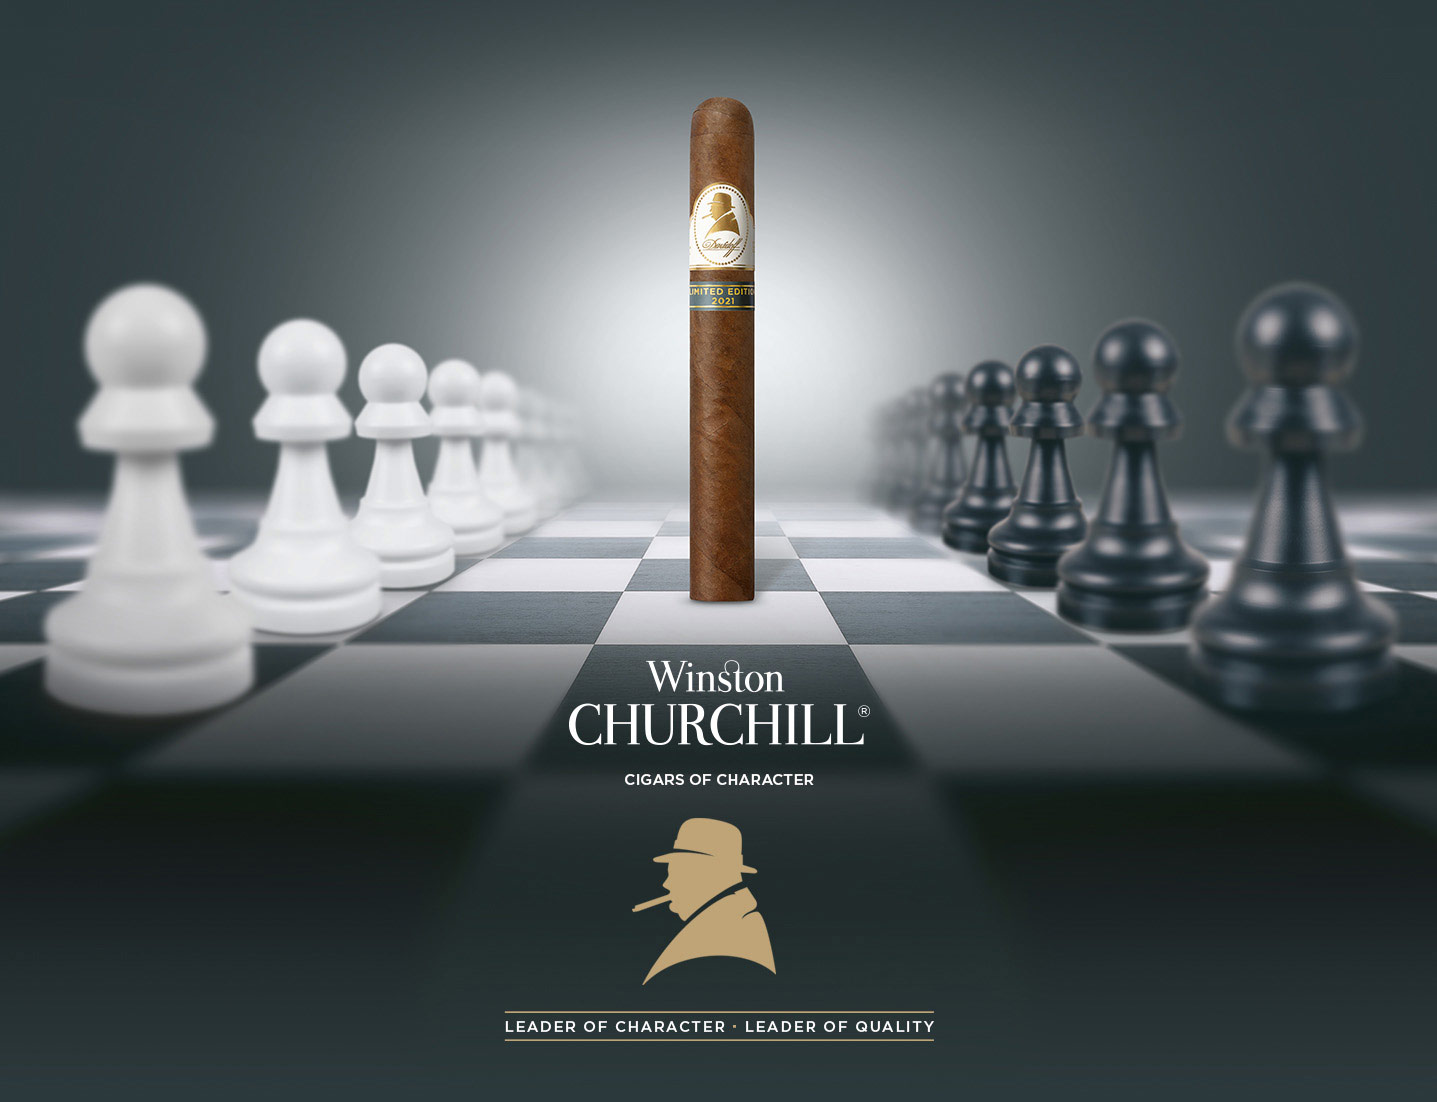 Die Davidoff Winston Churchill Zigarre 2021 Limited Edition